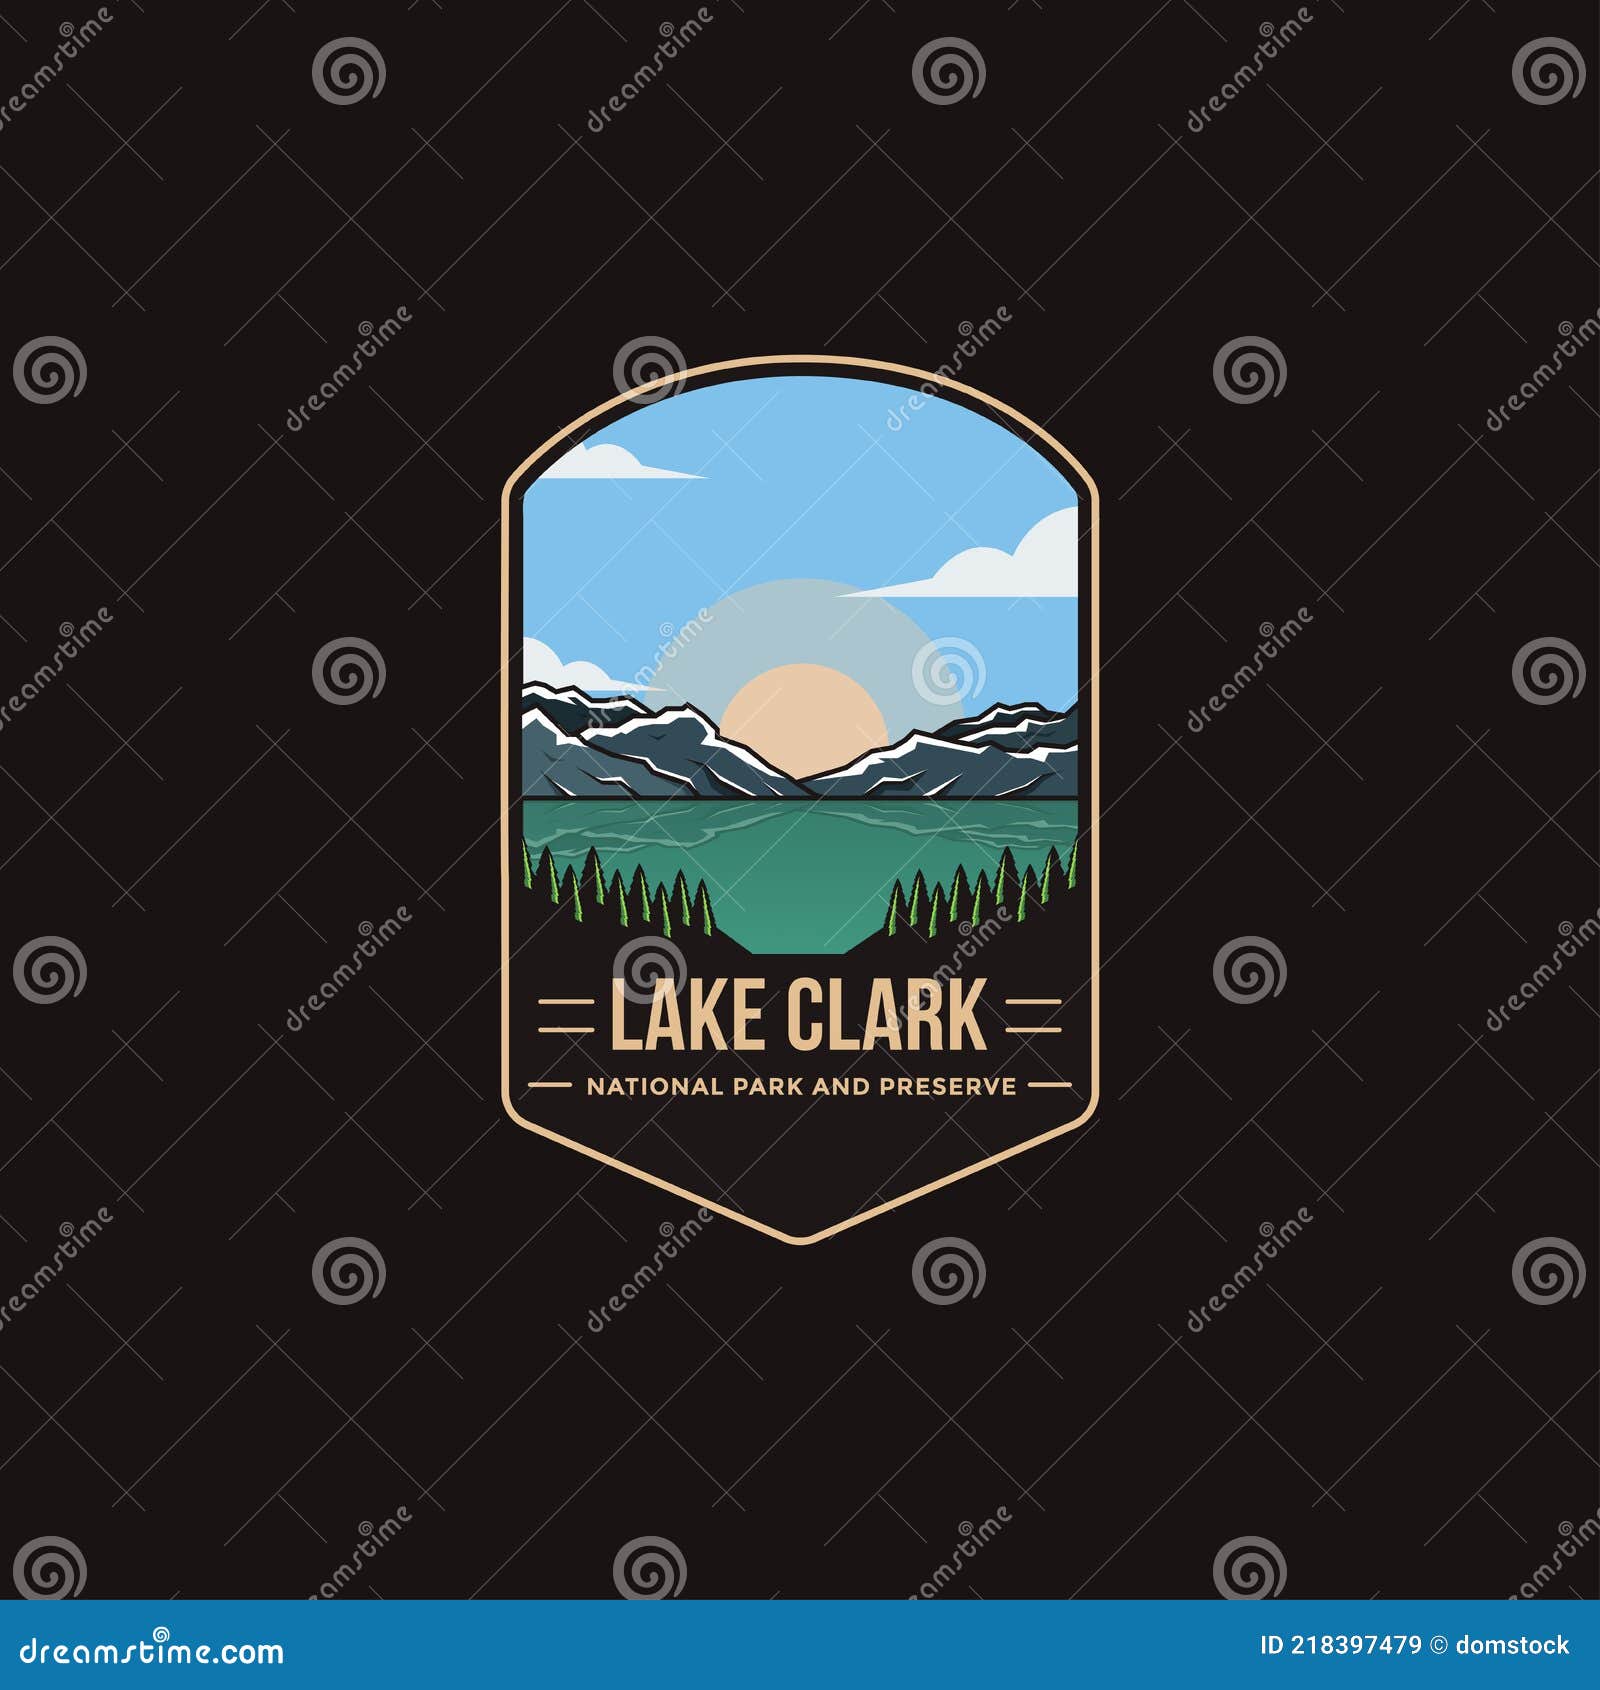 emblem patch logo  of lake clark national park and preserve